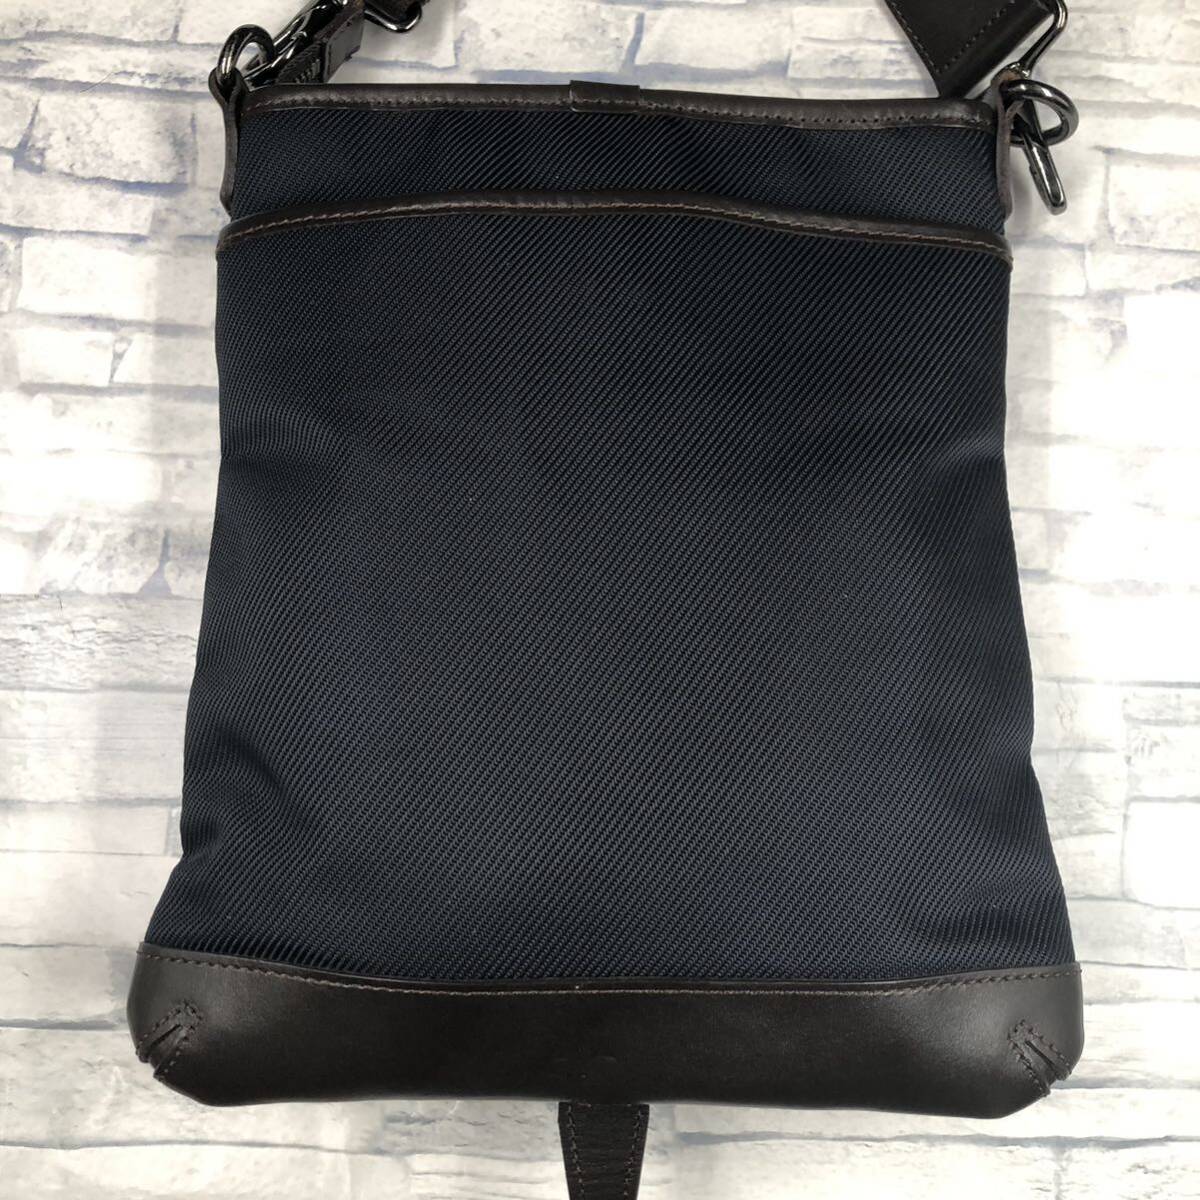 [ beautiful goods ]BURBERRY Burberry Black Label men's shoulder bag sakoshu diagonal ..noba check leather nylon navy navy blue 